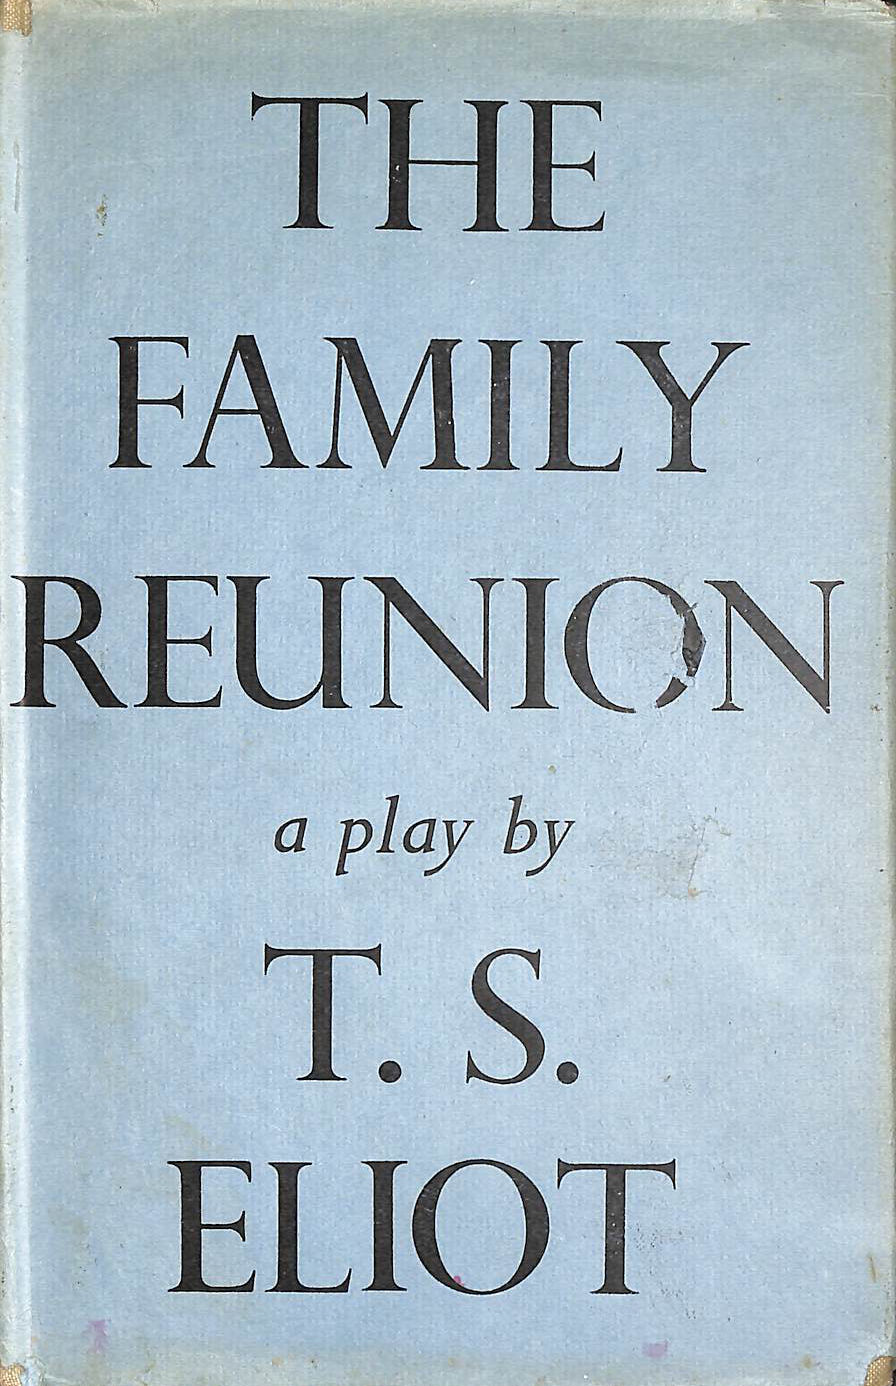 ELIOT, T.S. - The Family Reunion